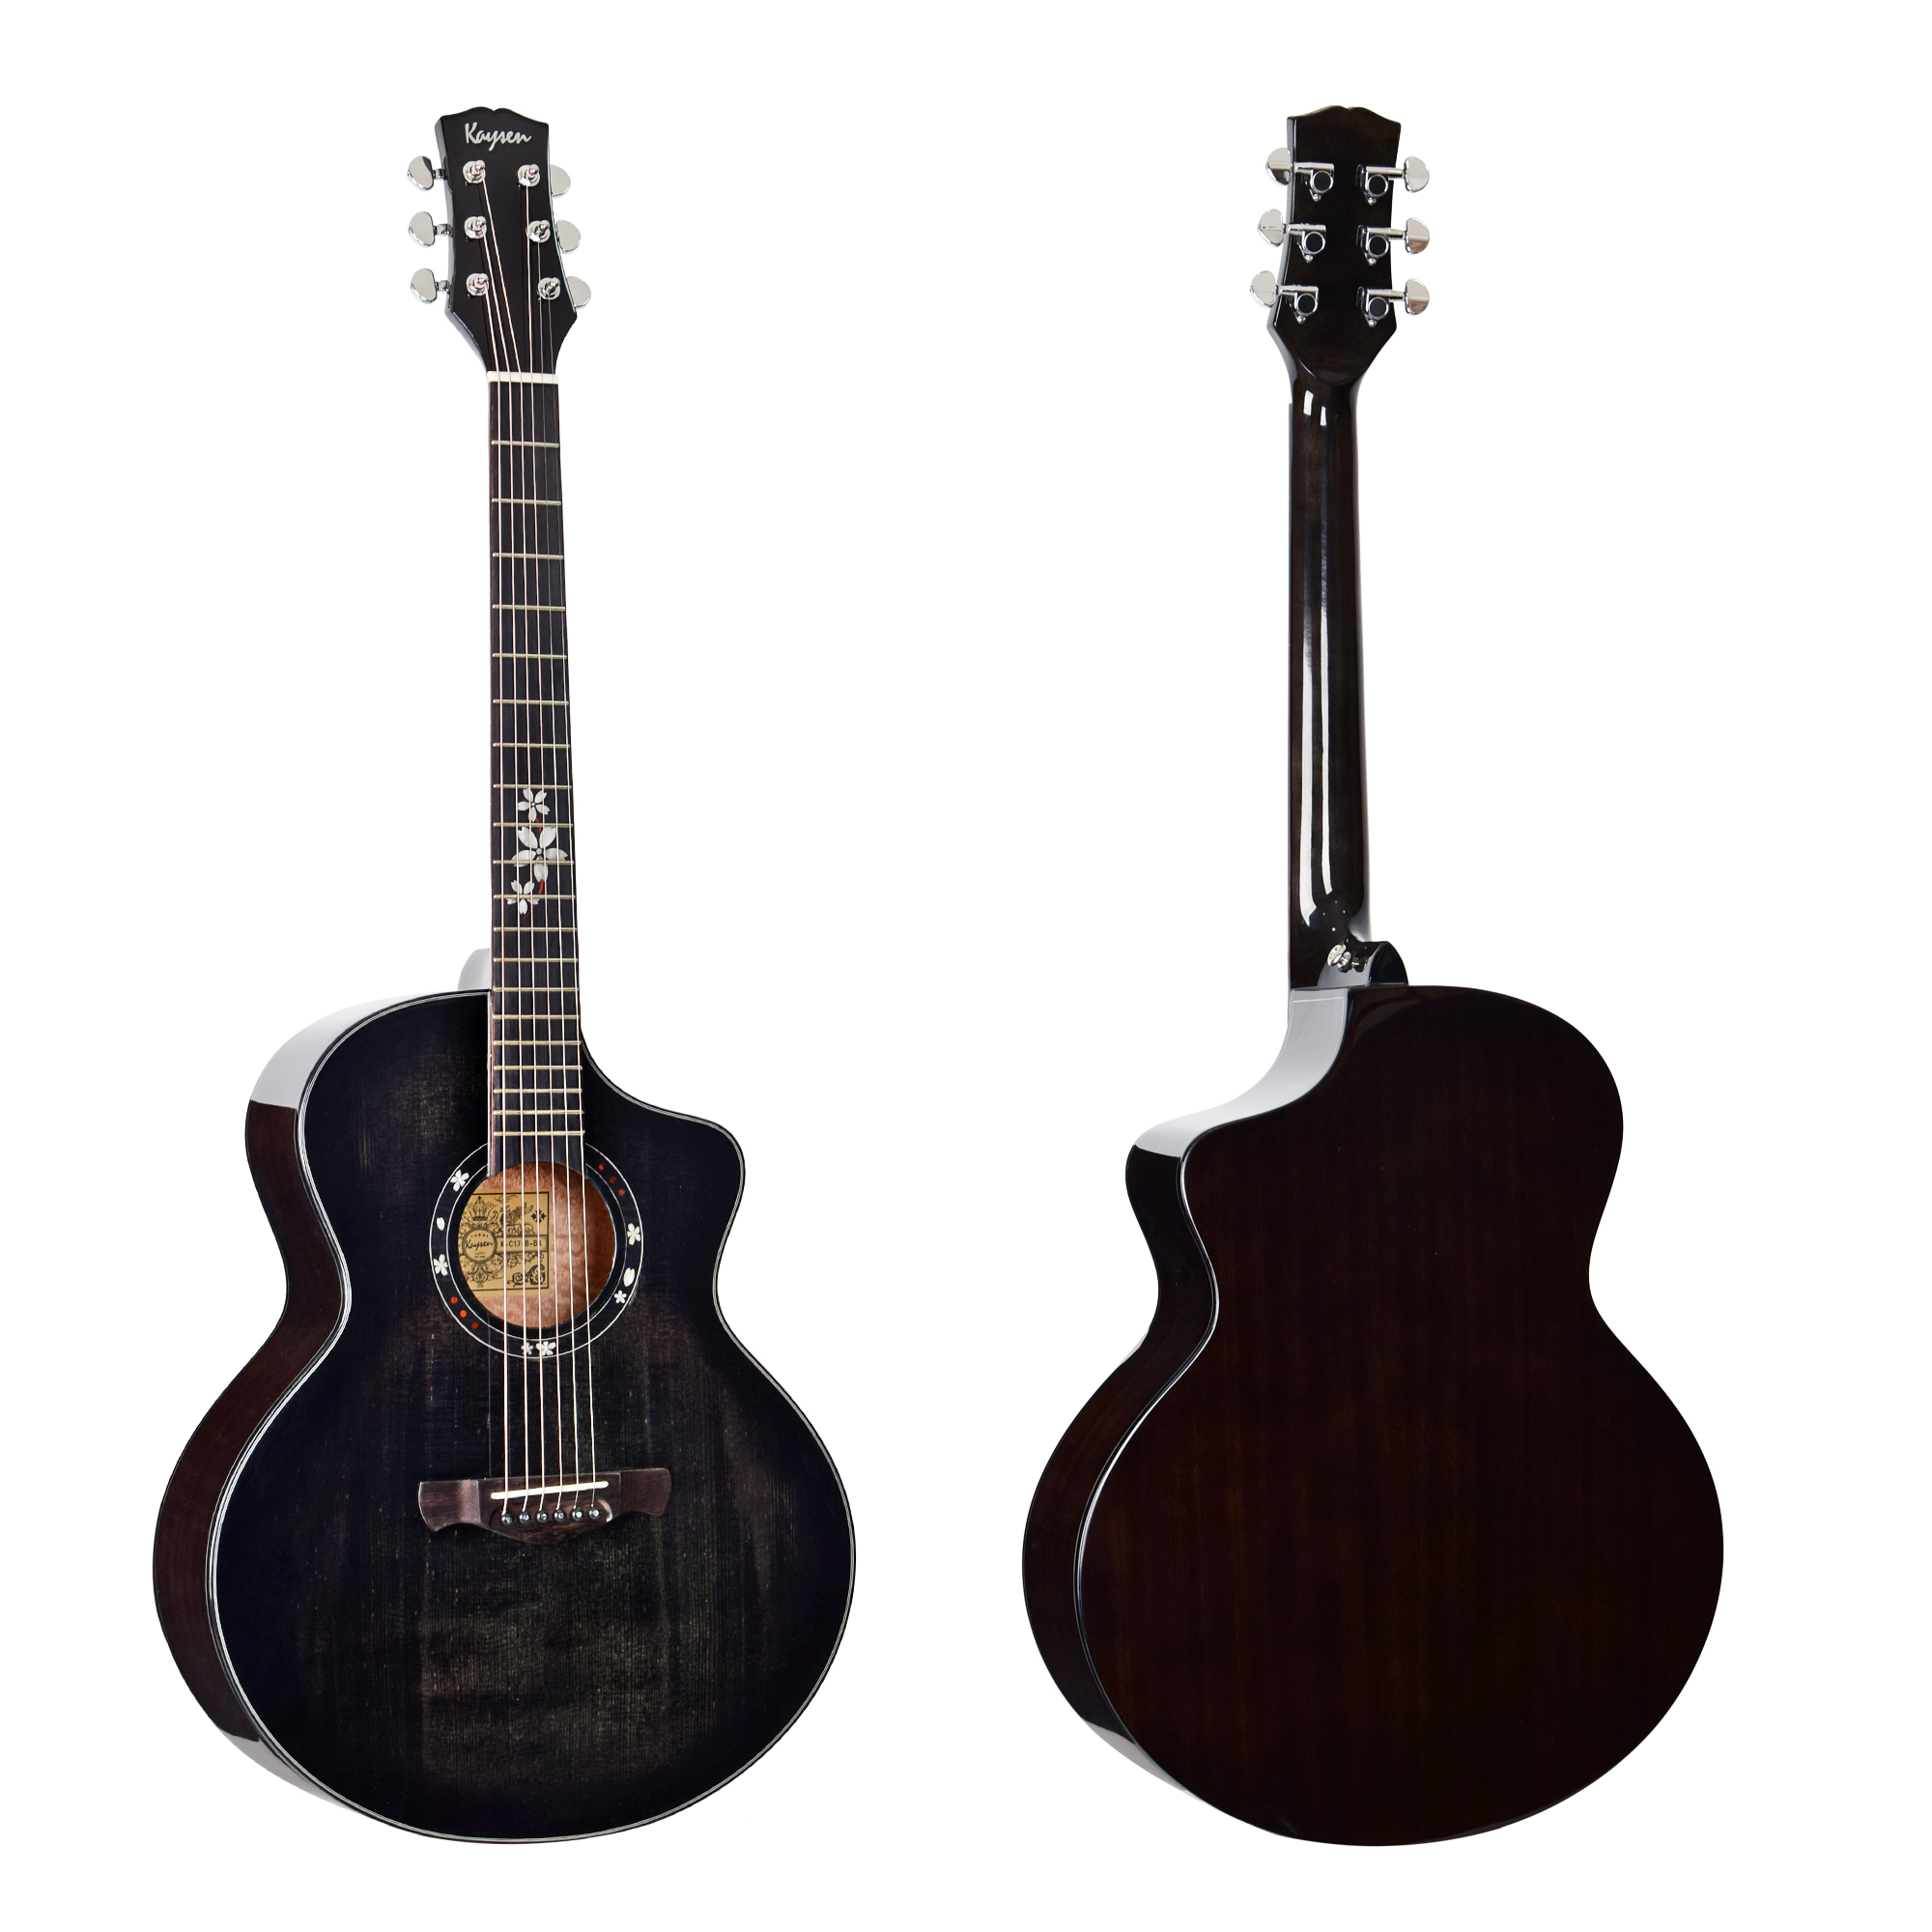 K-C17B solid acoustic guitar